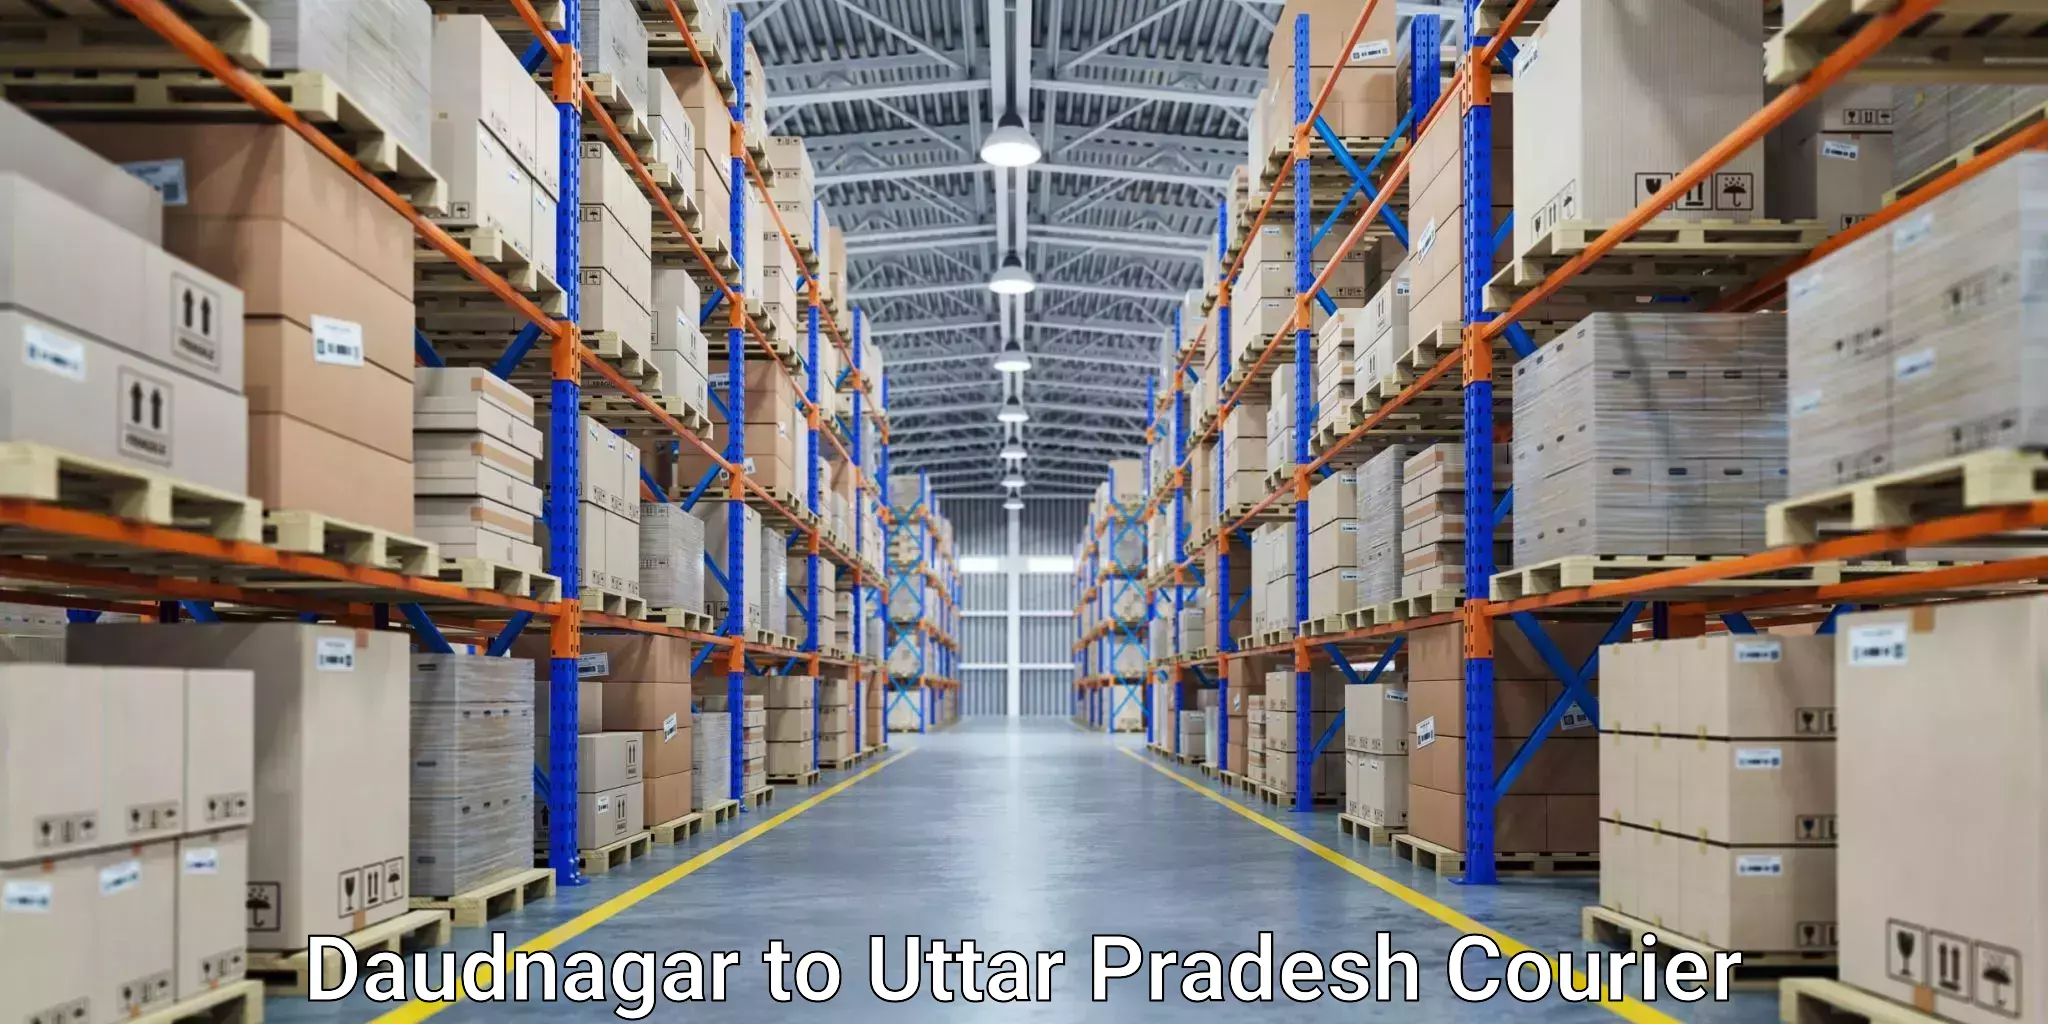 Express delivery network Daudnagar to Kheragarh